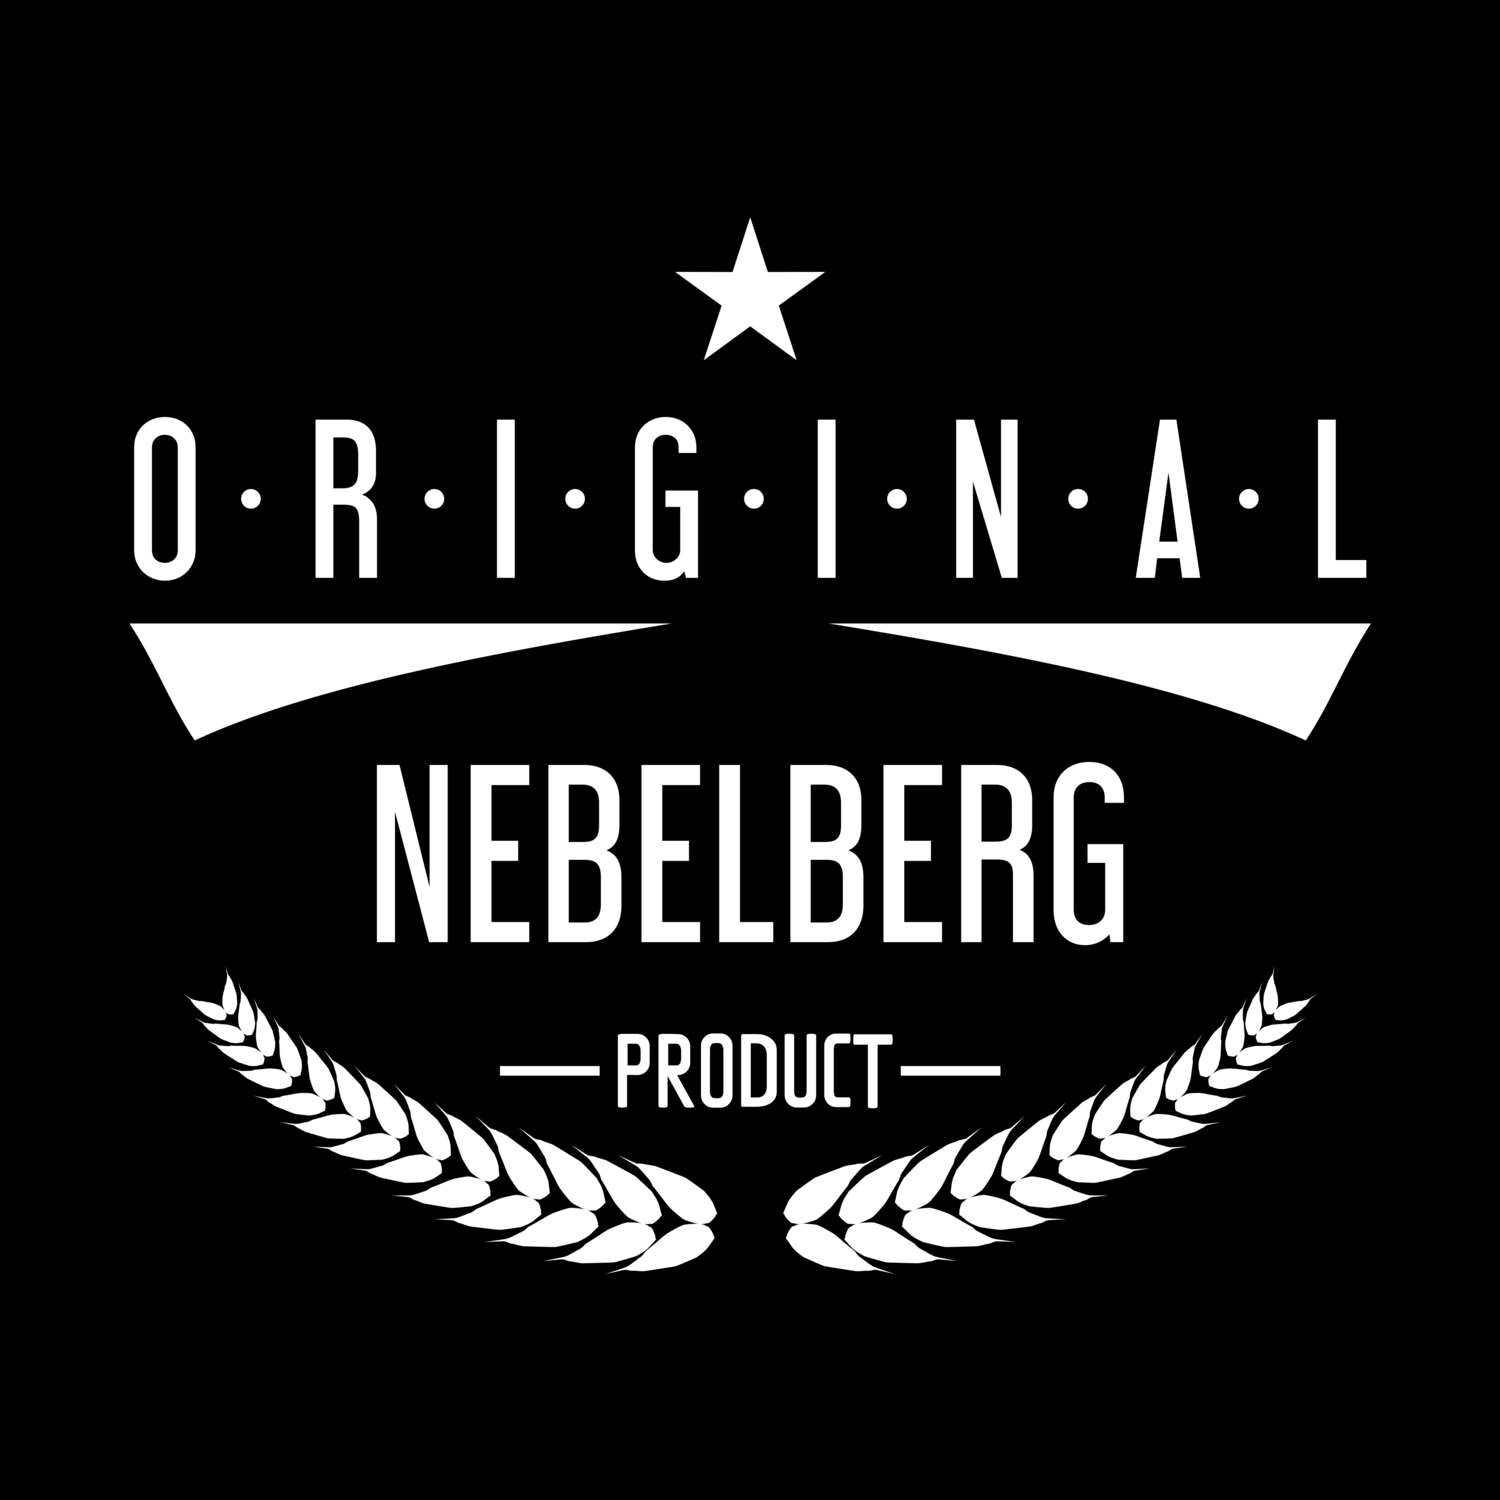 Nebelberg T-Shirt »Original Product«